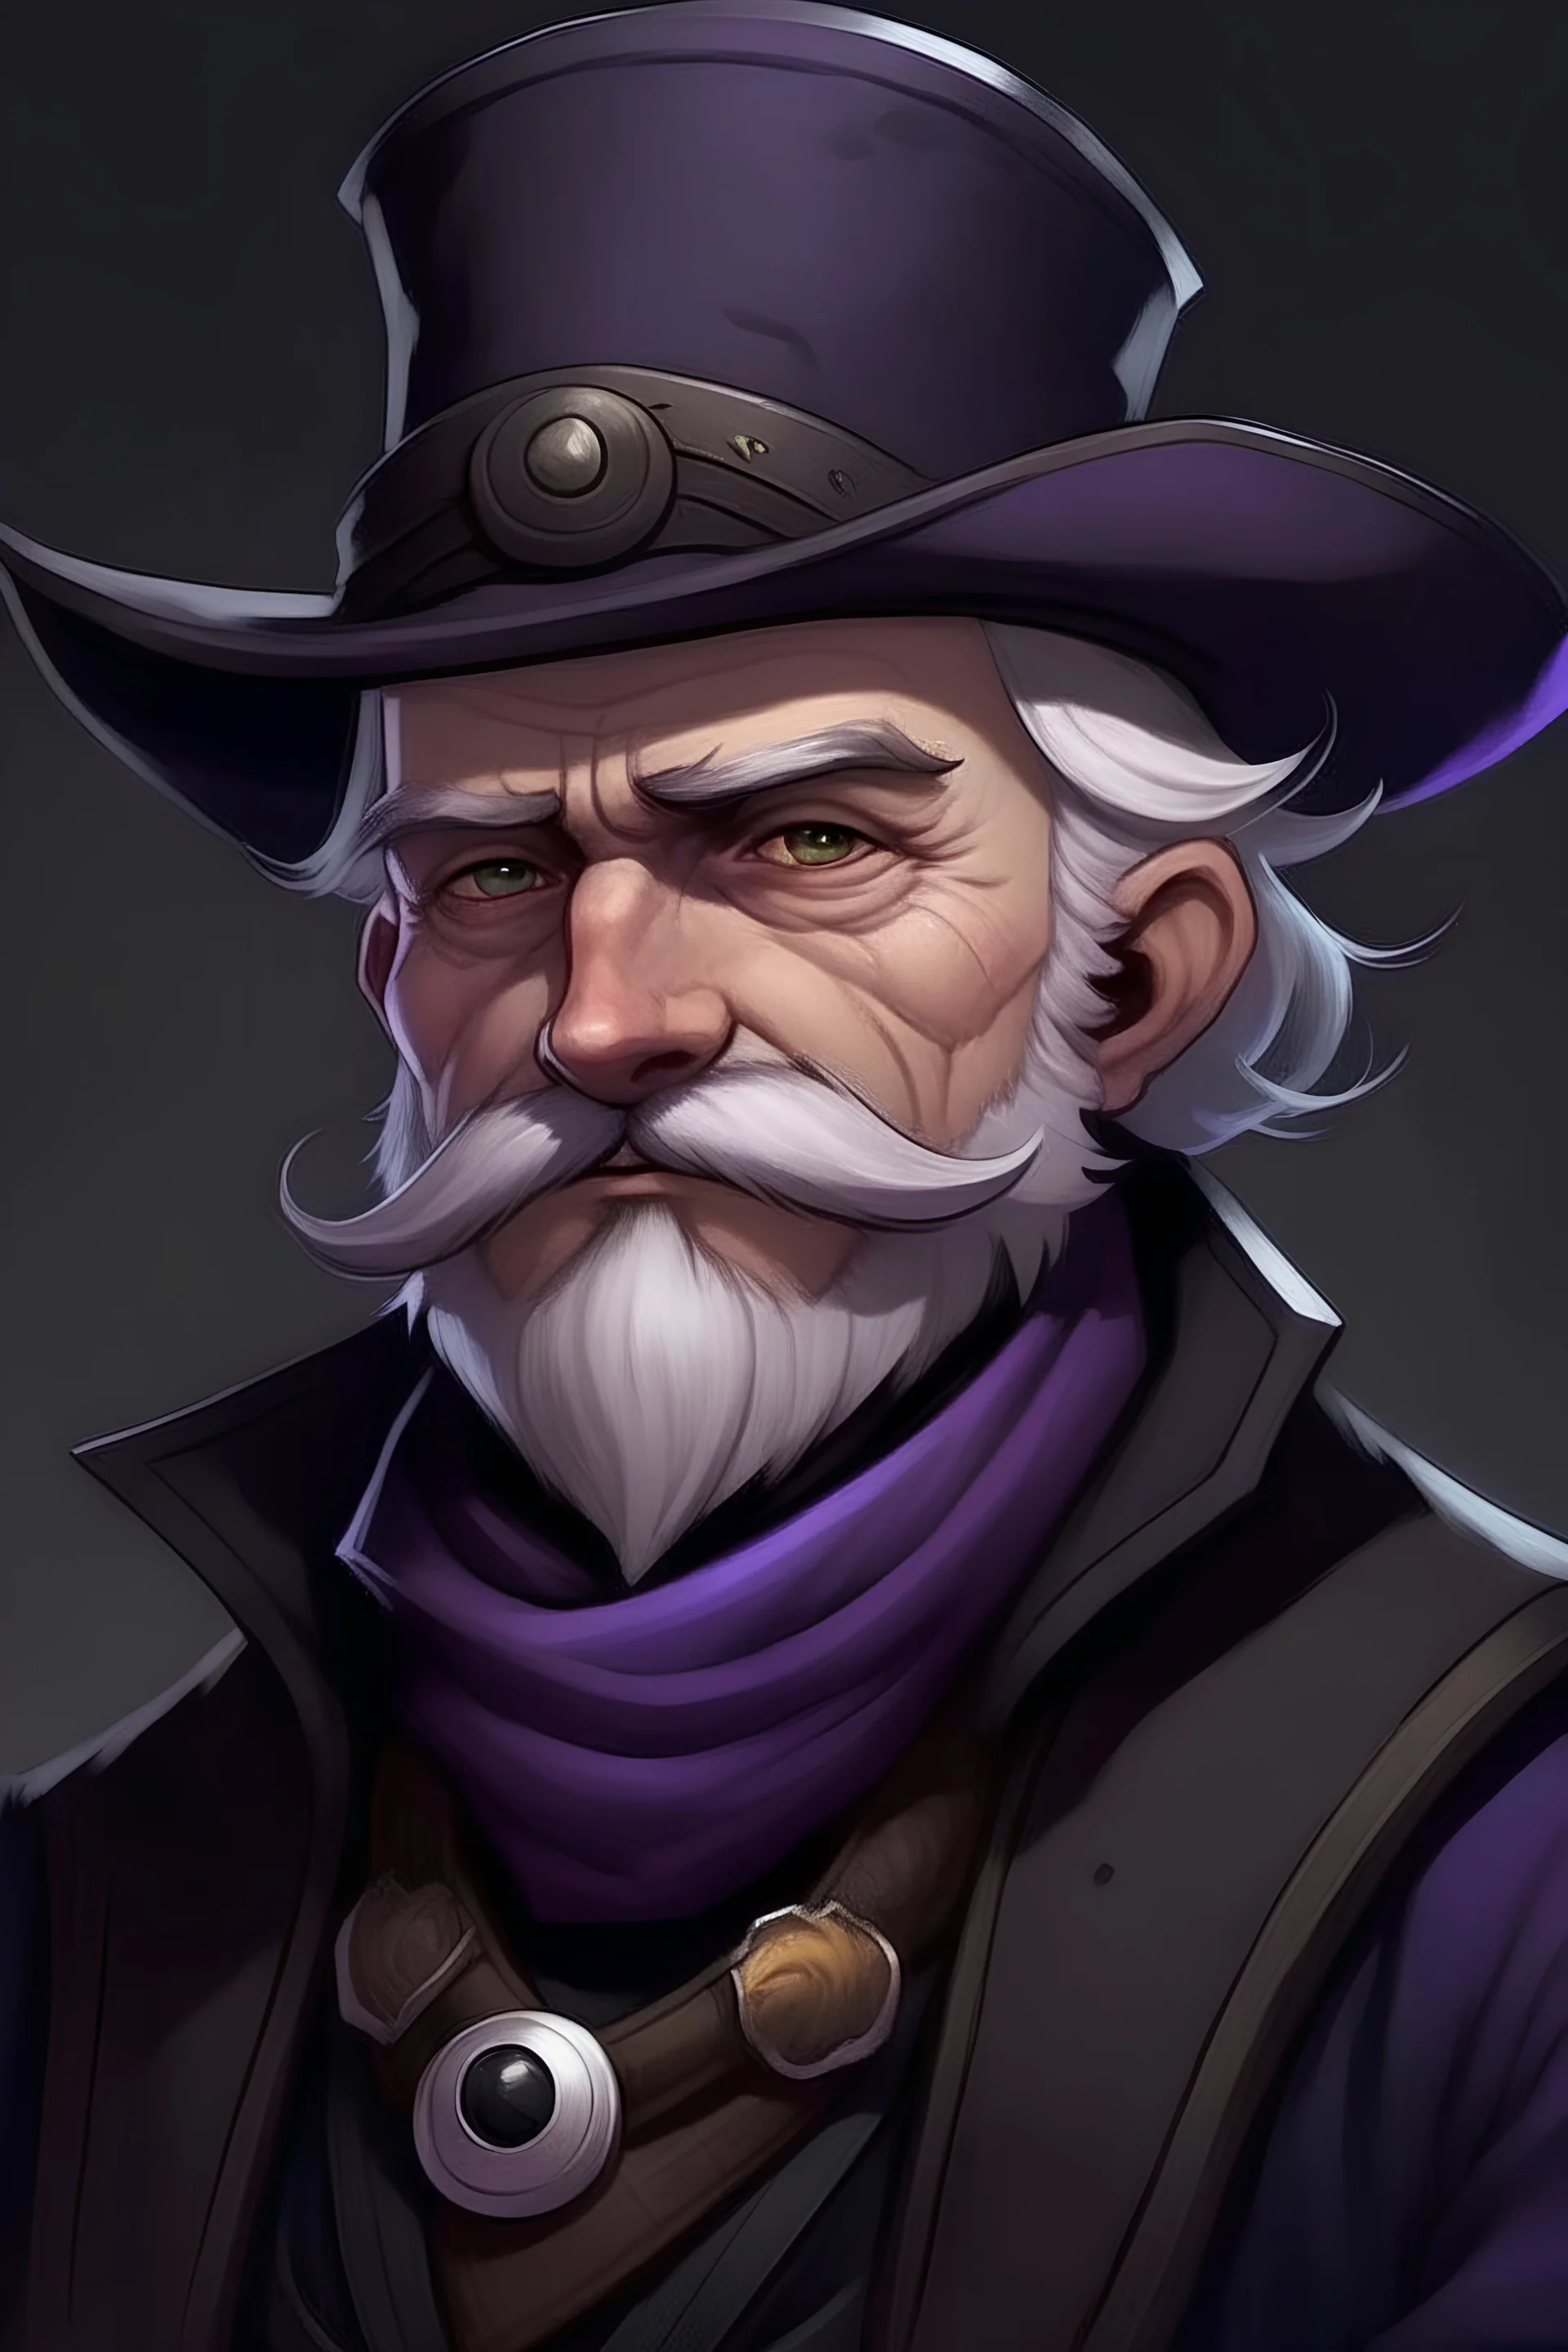 dwarf rogue gambler long black coat flat hat handle bar mustache white hair, purple skin, younger